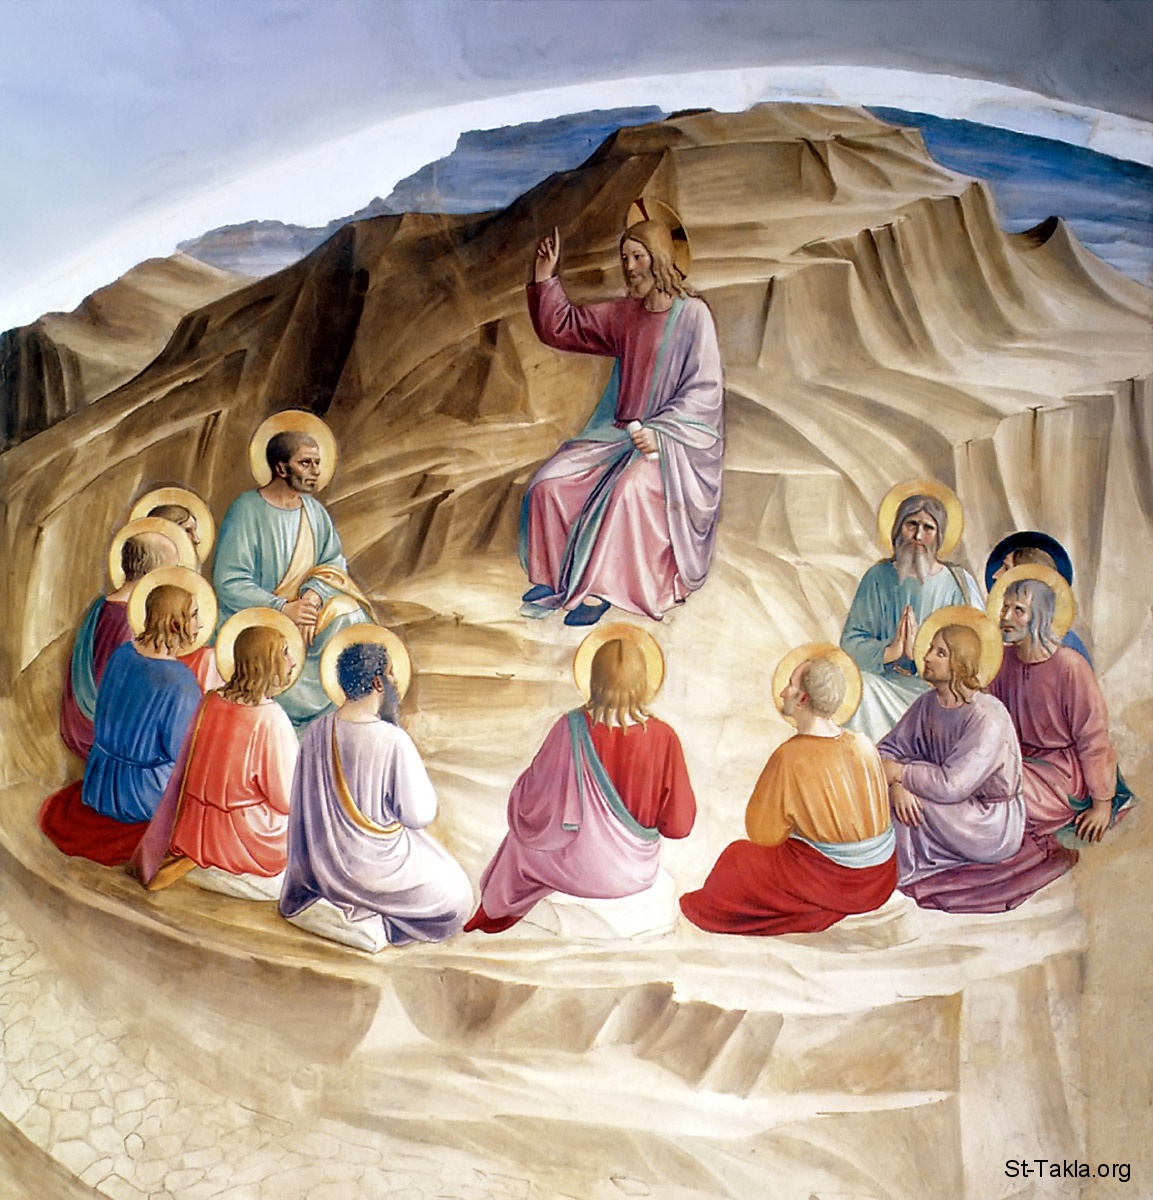 St-Takla.org Image: Jesus, Sermon on the Mount, painting by Fra Angelico, 1440 صورة في موقع الأنبا تكلا: لوحة العظة على الجبل، رسم الفنان فرا أنجيليكو، 1440